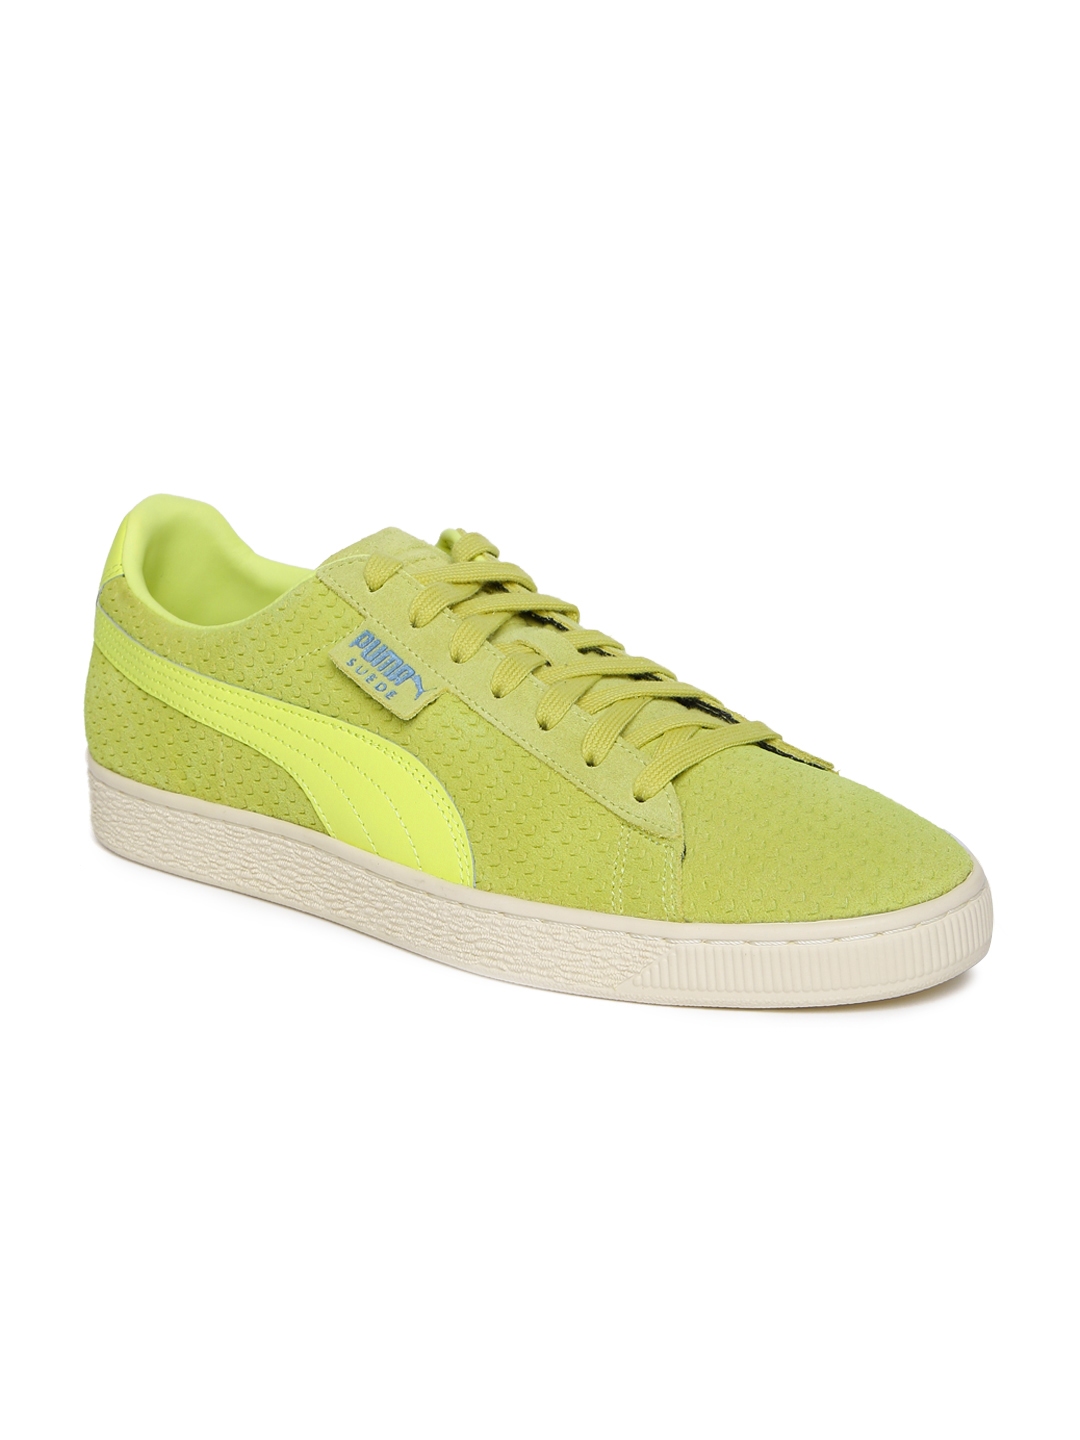 puma fluorescent green shoes